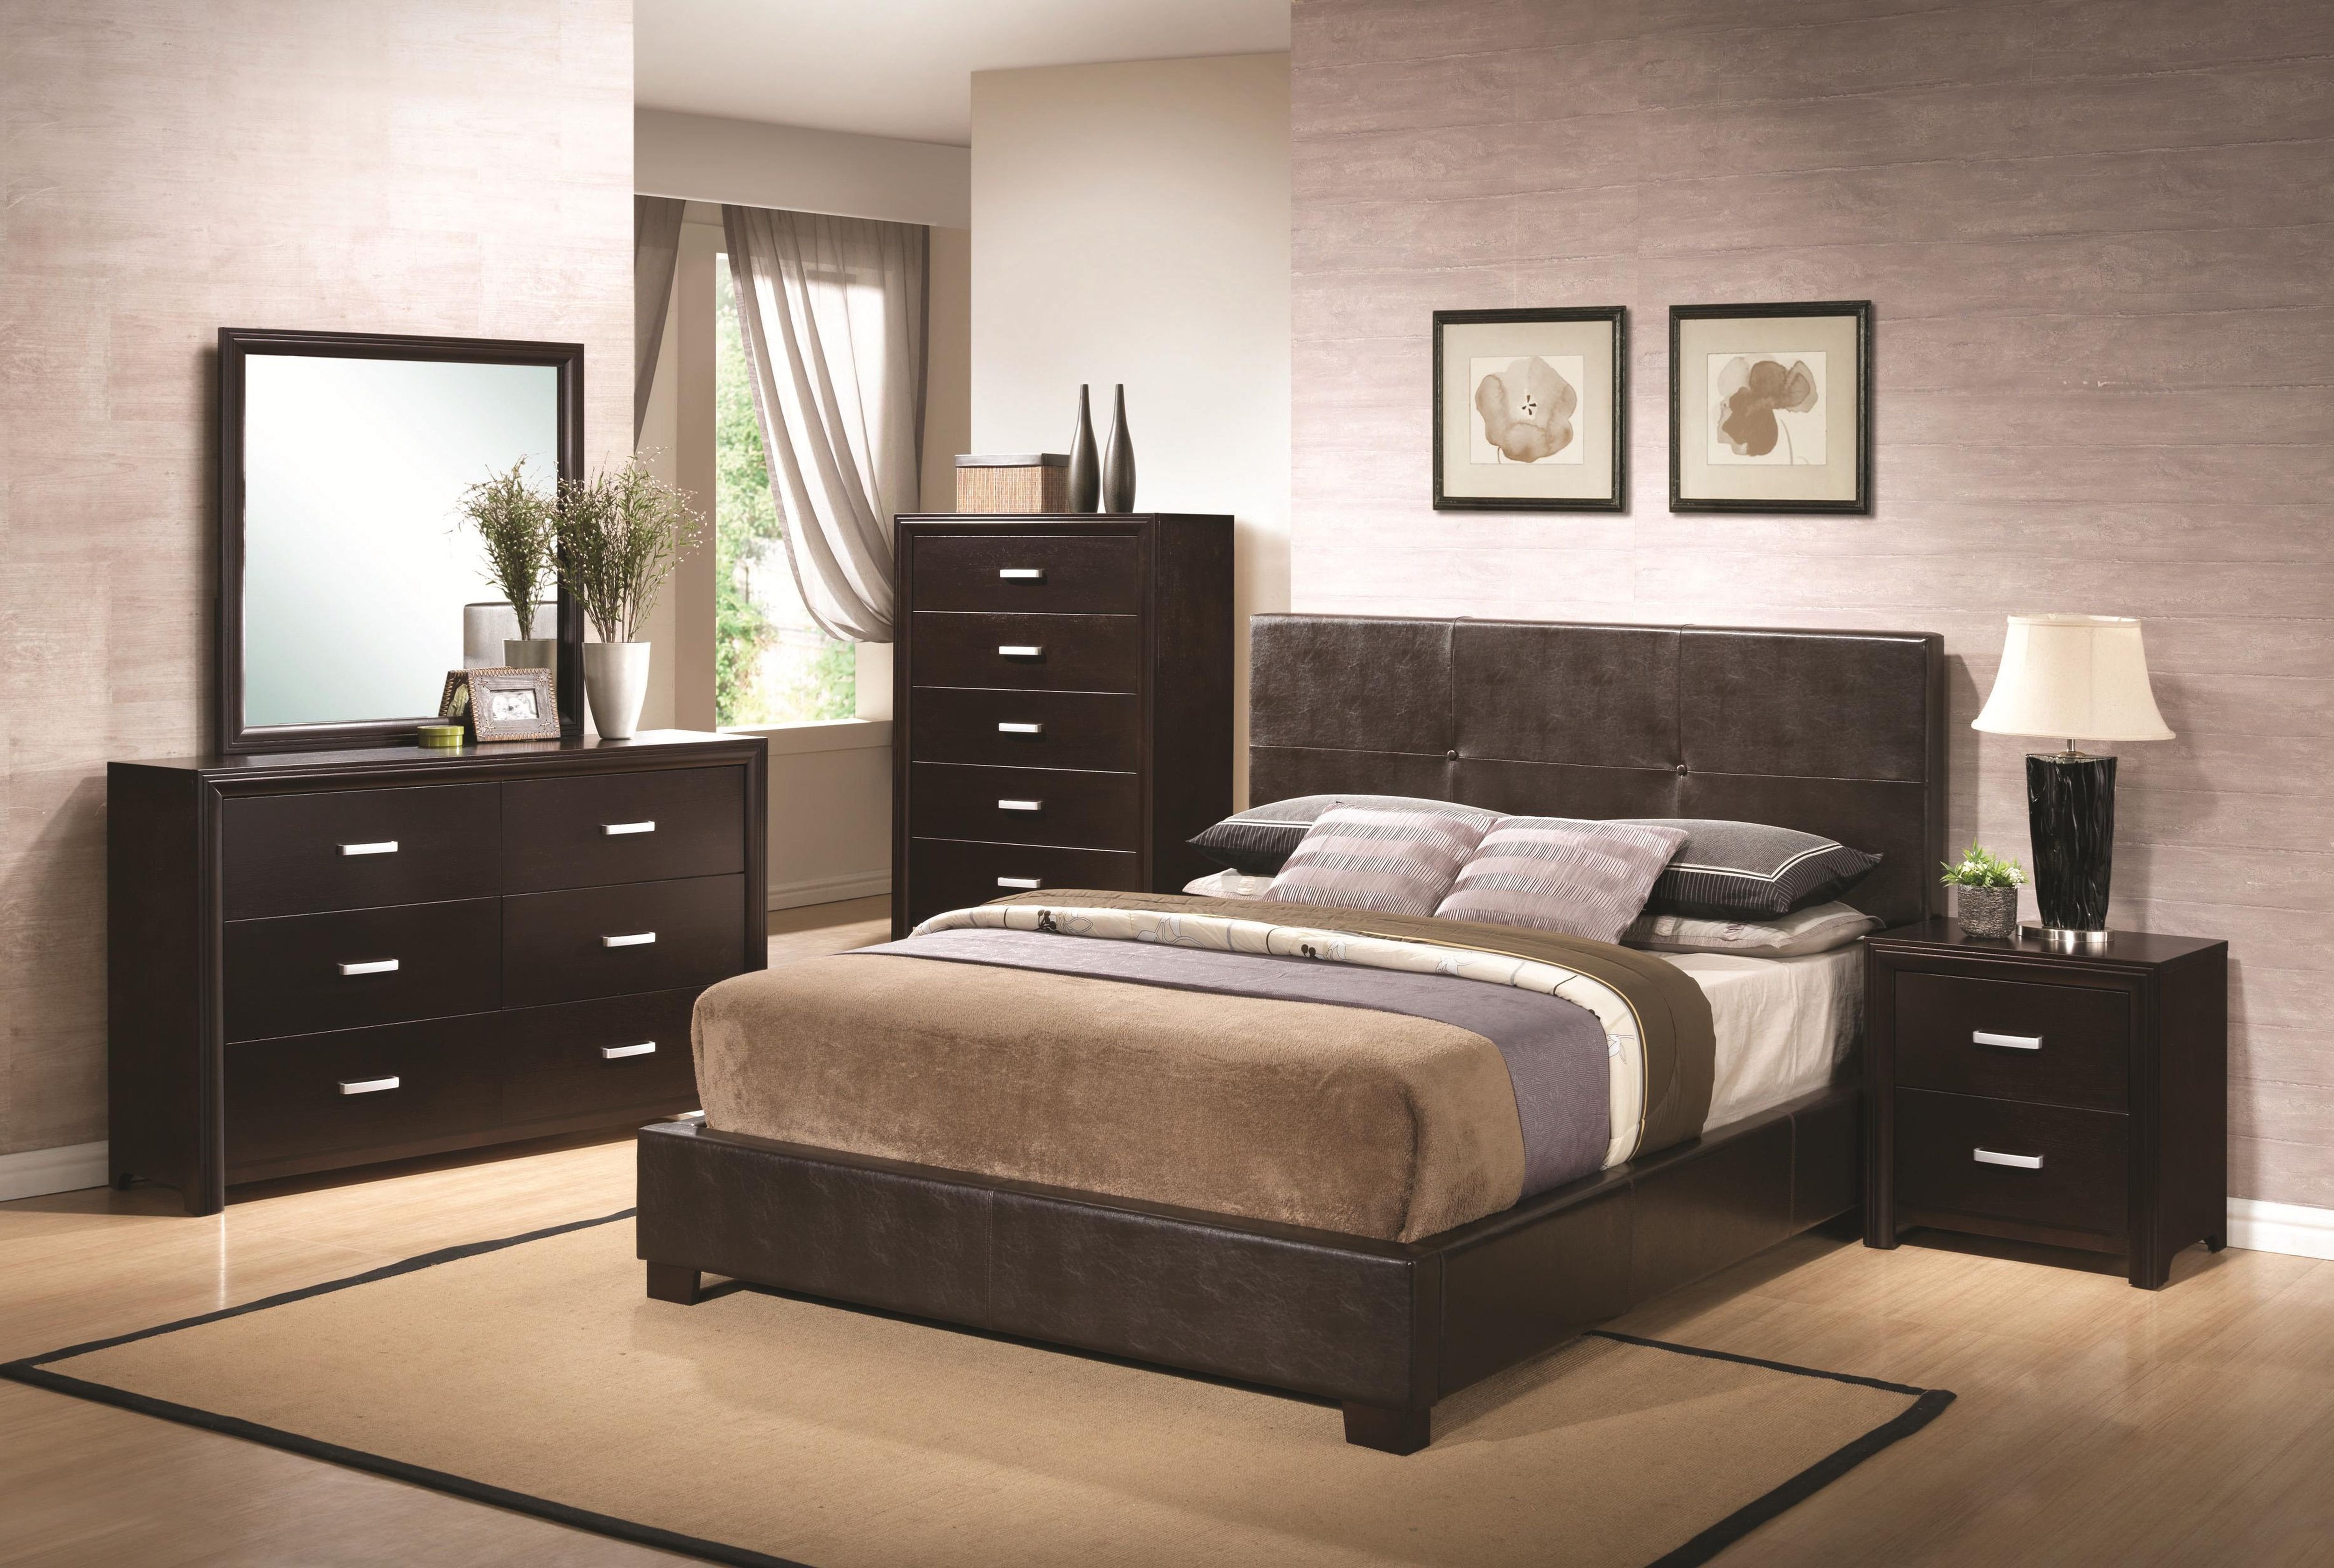 ikea double bedroom furniture